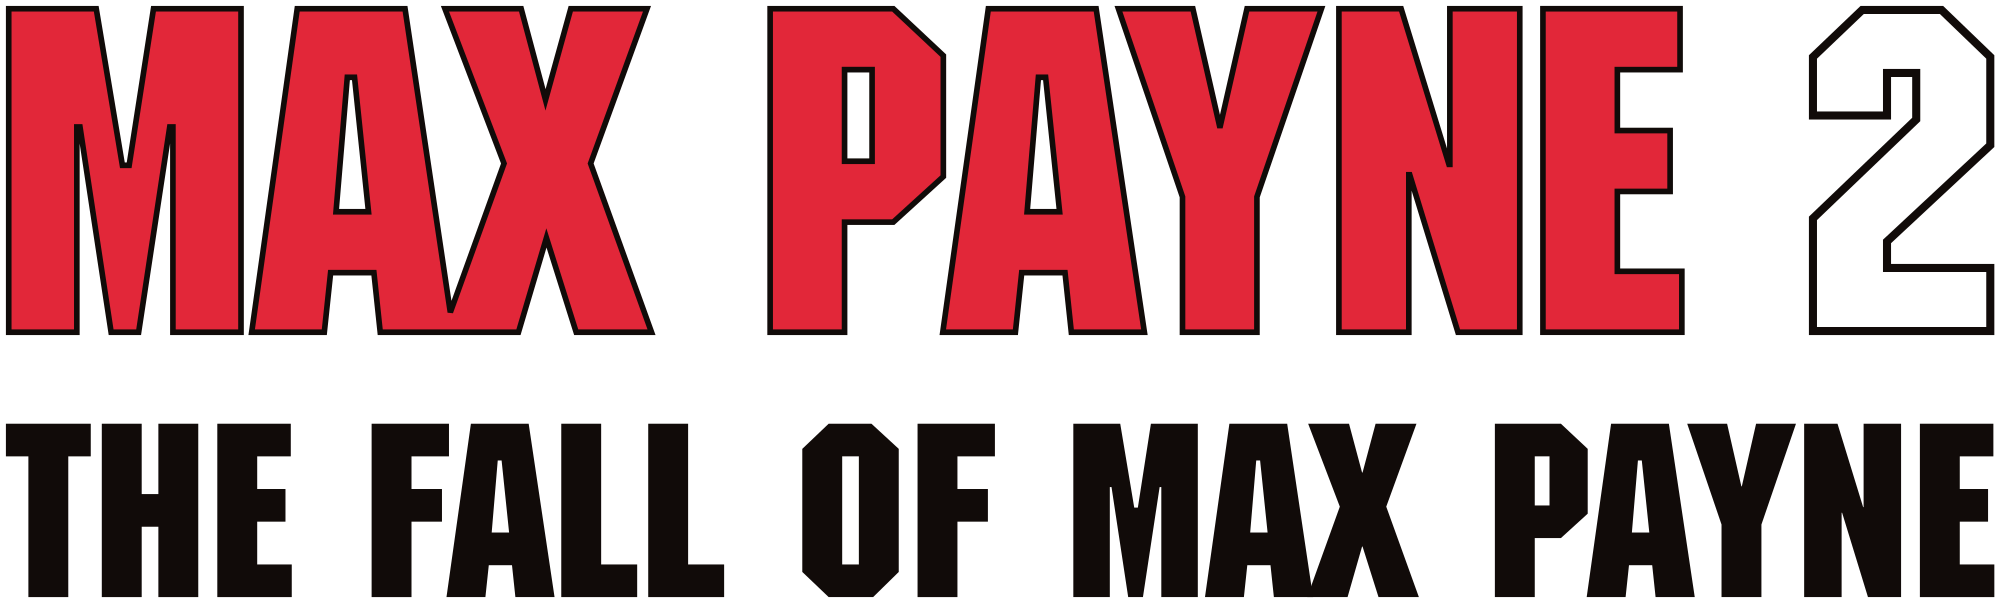 Max Payne Logo PNG Image Background